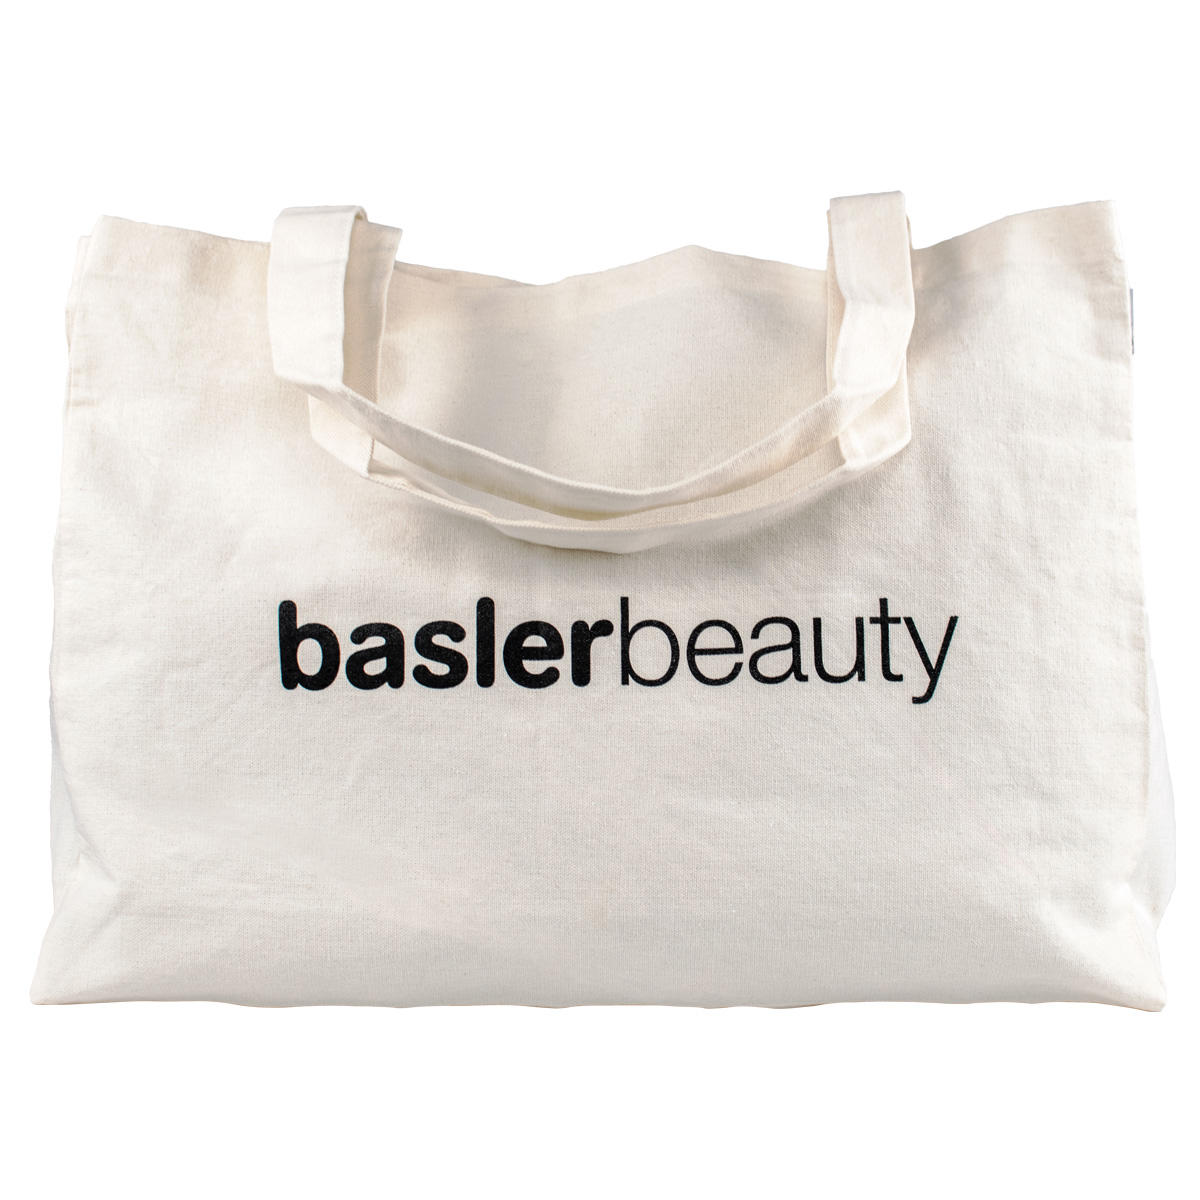 baslerbeauty Sac de plage & Shopper be yourself  - 1